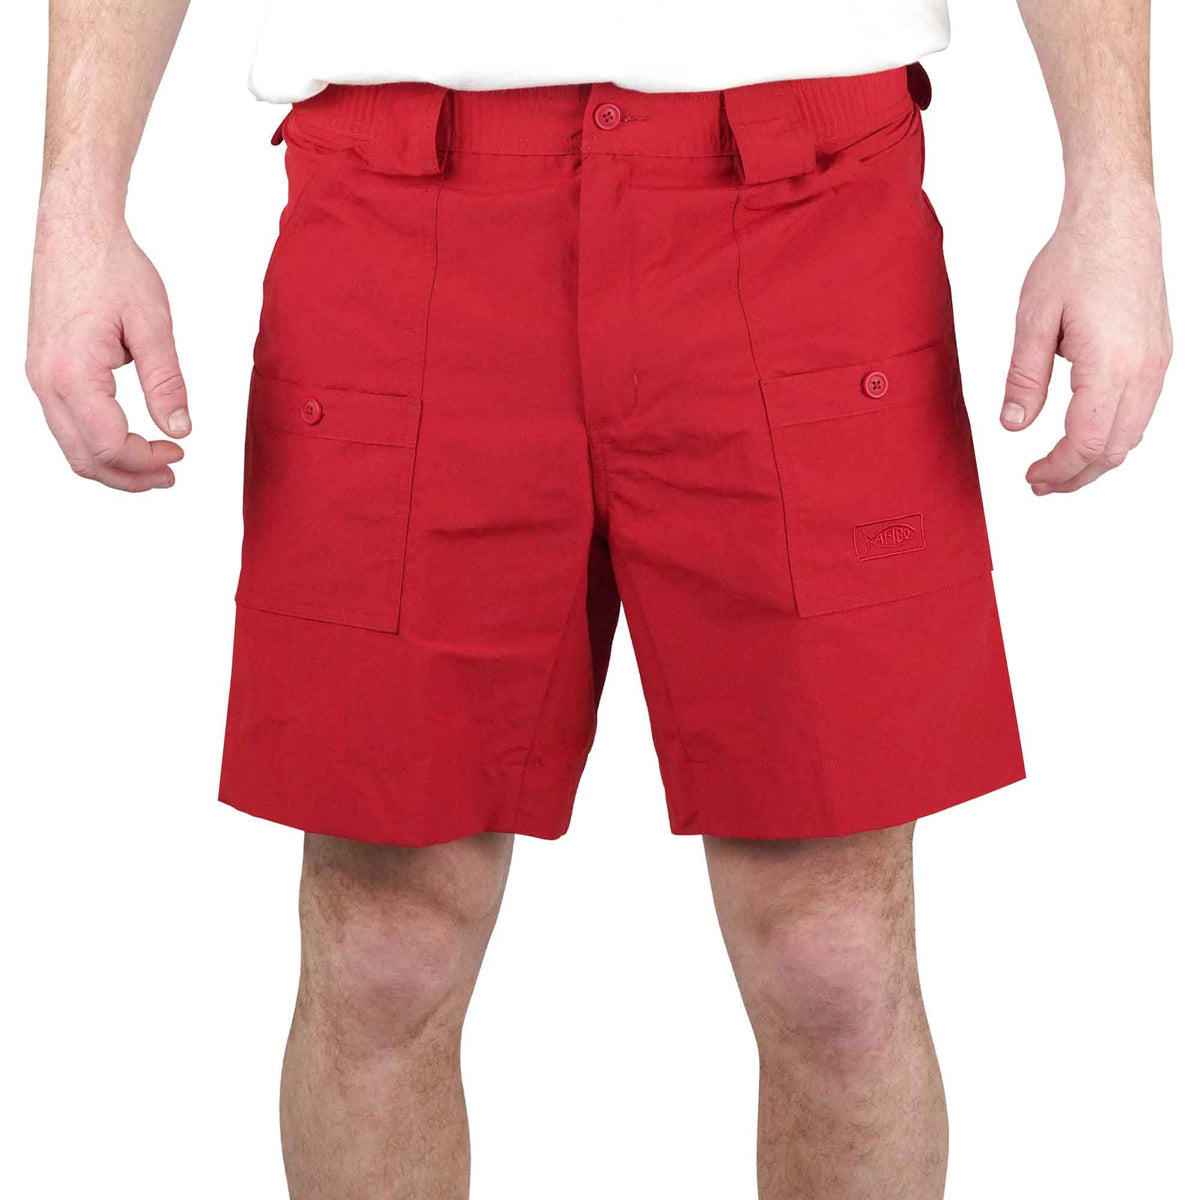 AFTCO Original Fishing Shorts- 8 inch inseam